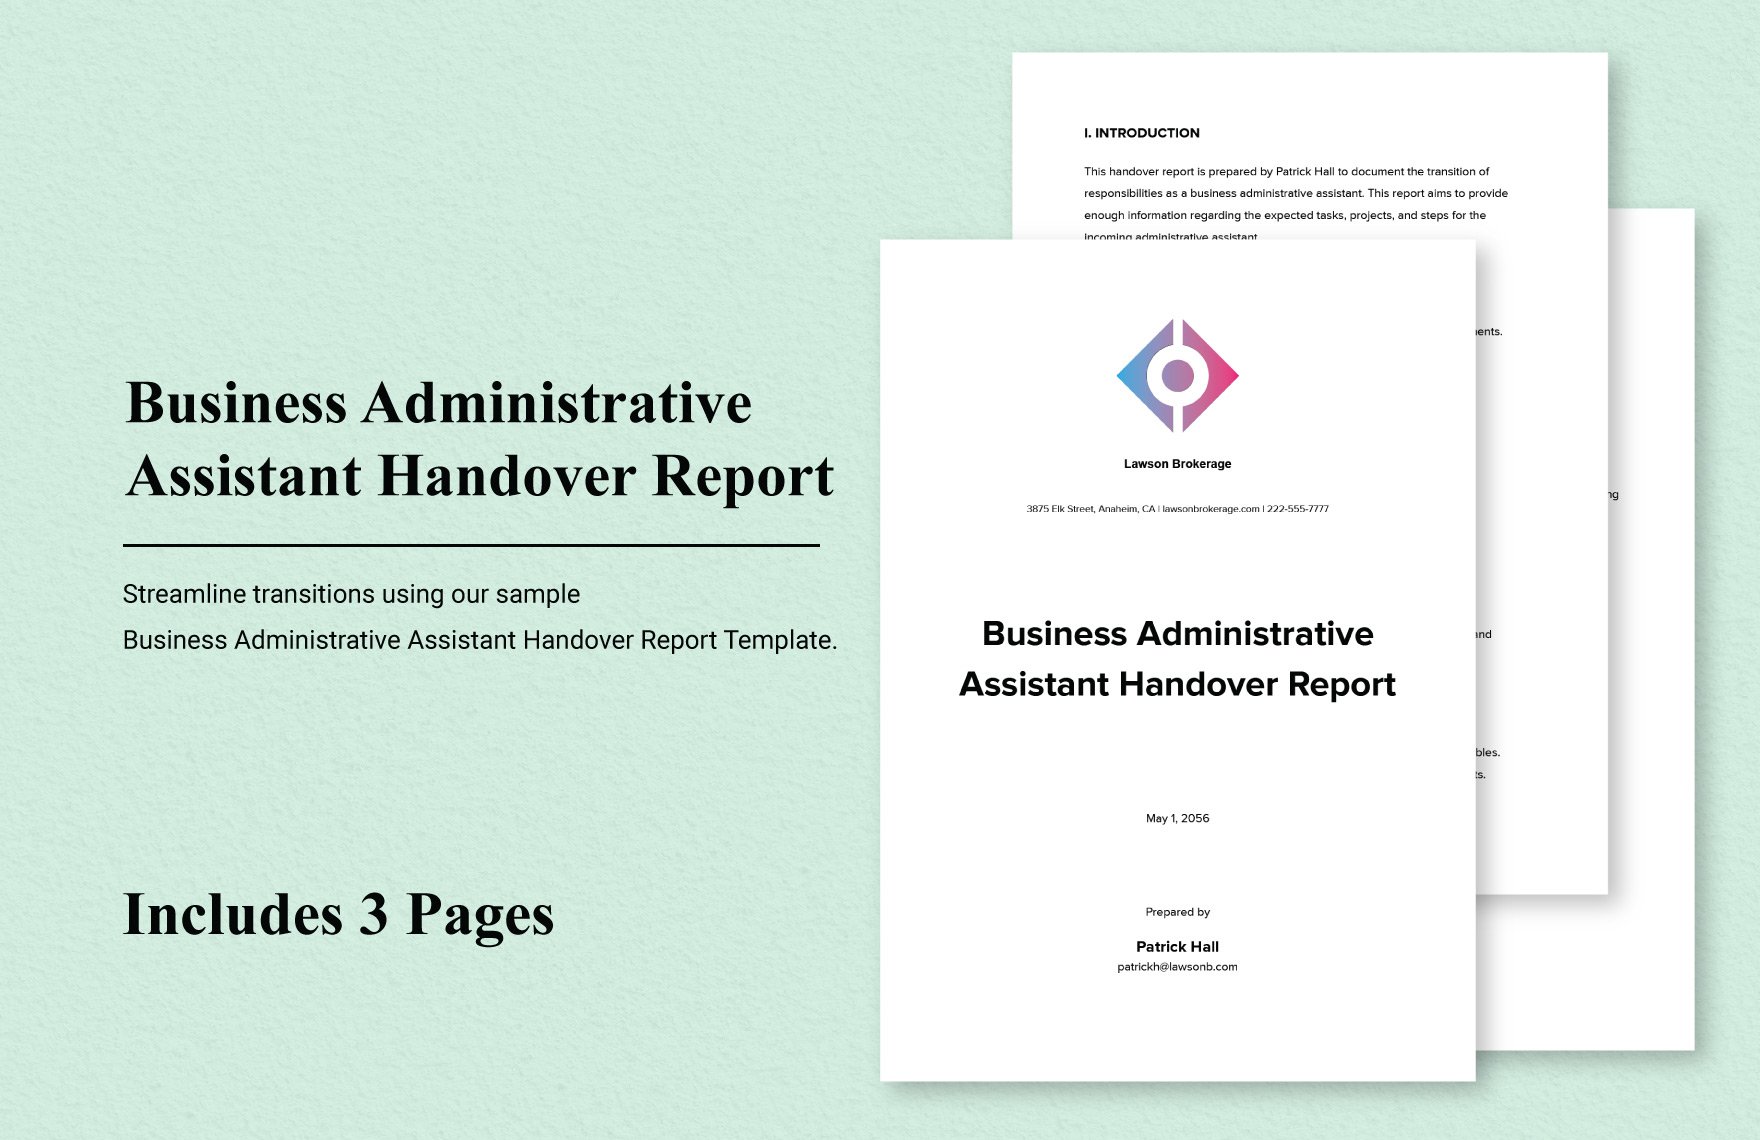 Business Administrative Assistant Handover Report